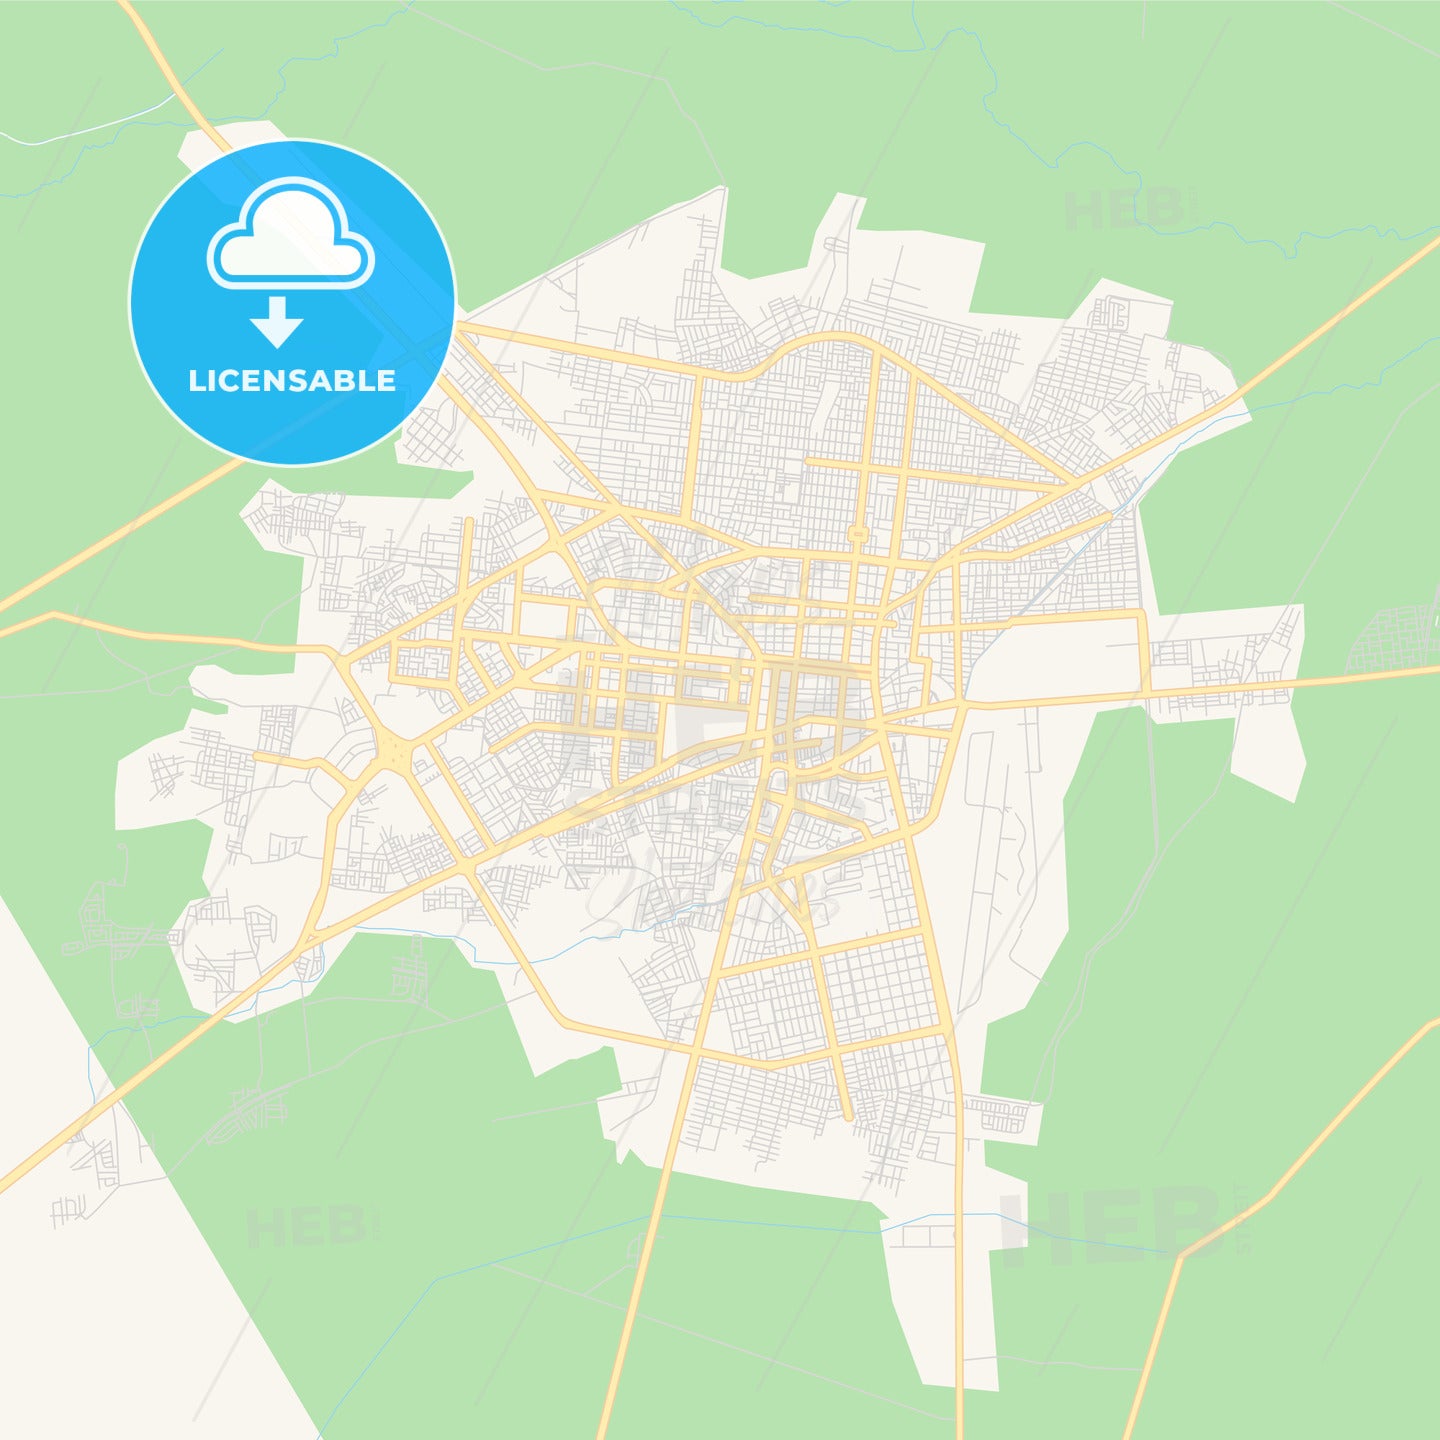 Printable street map of Chiclayo, Peru